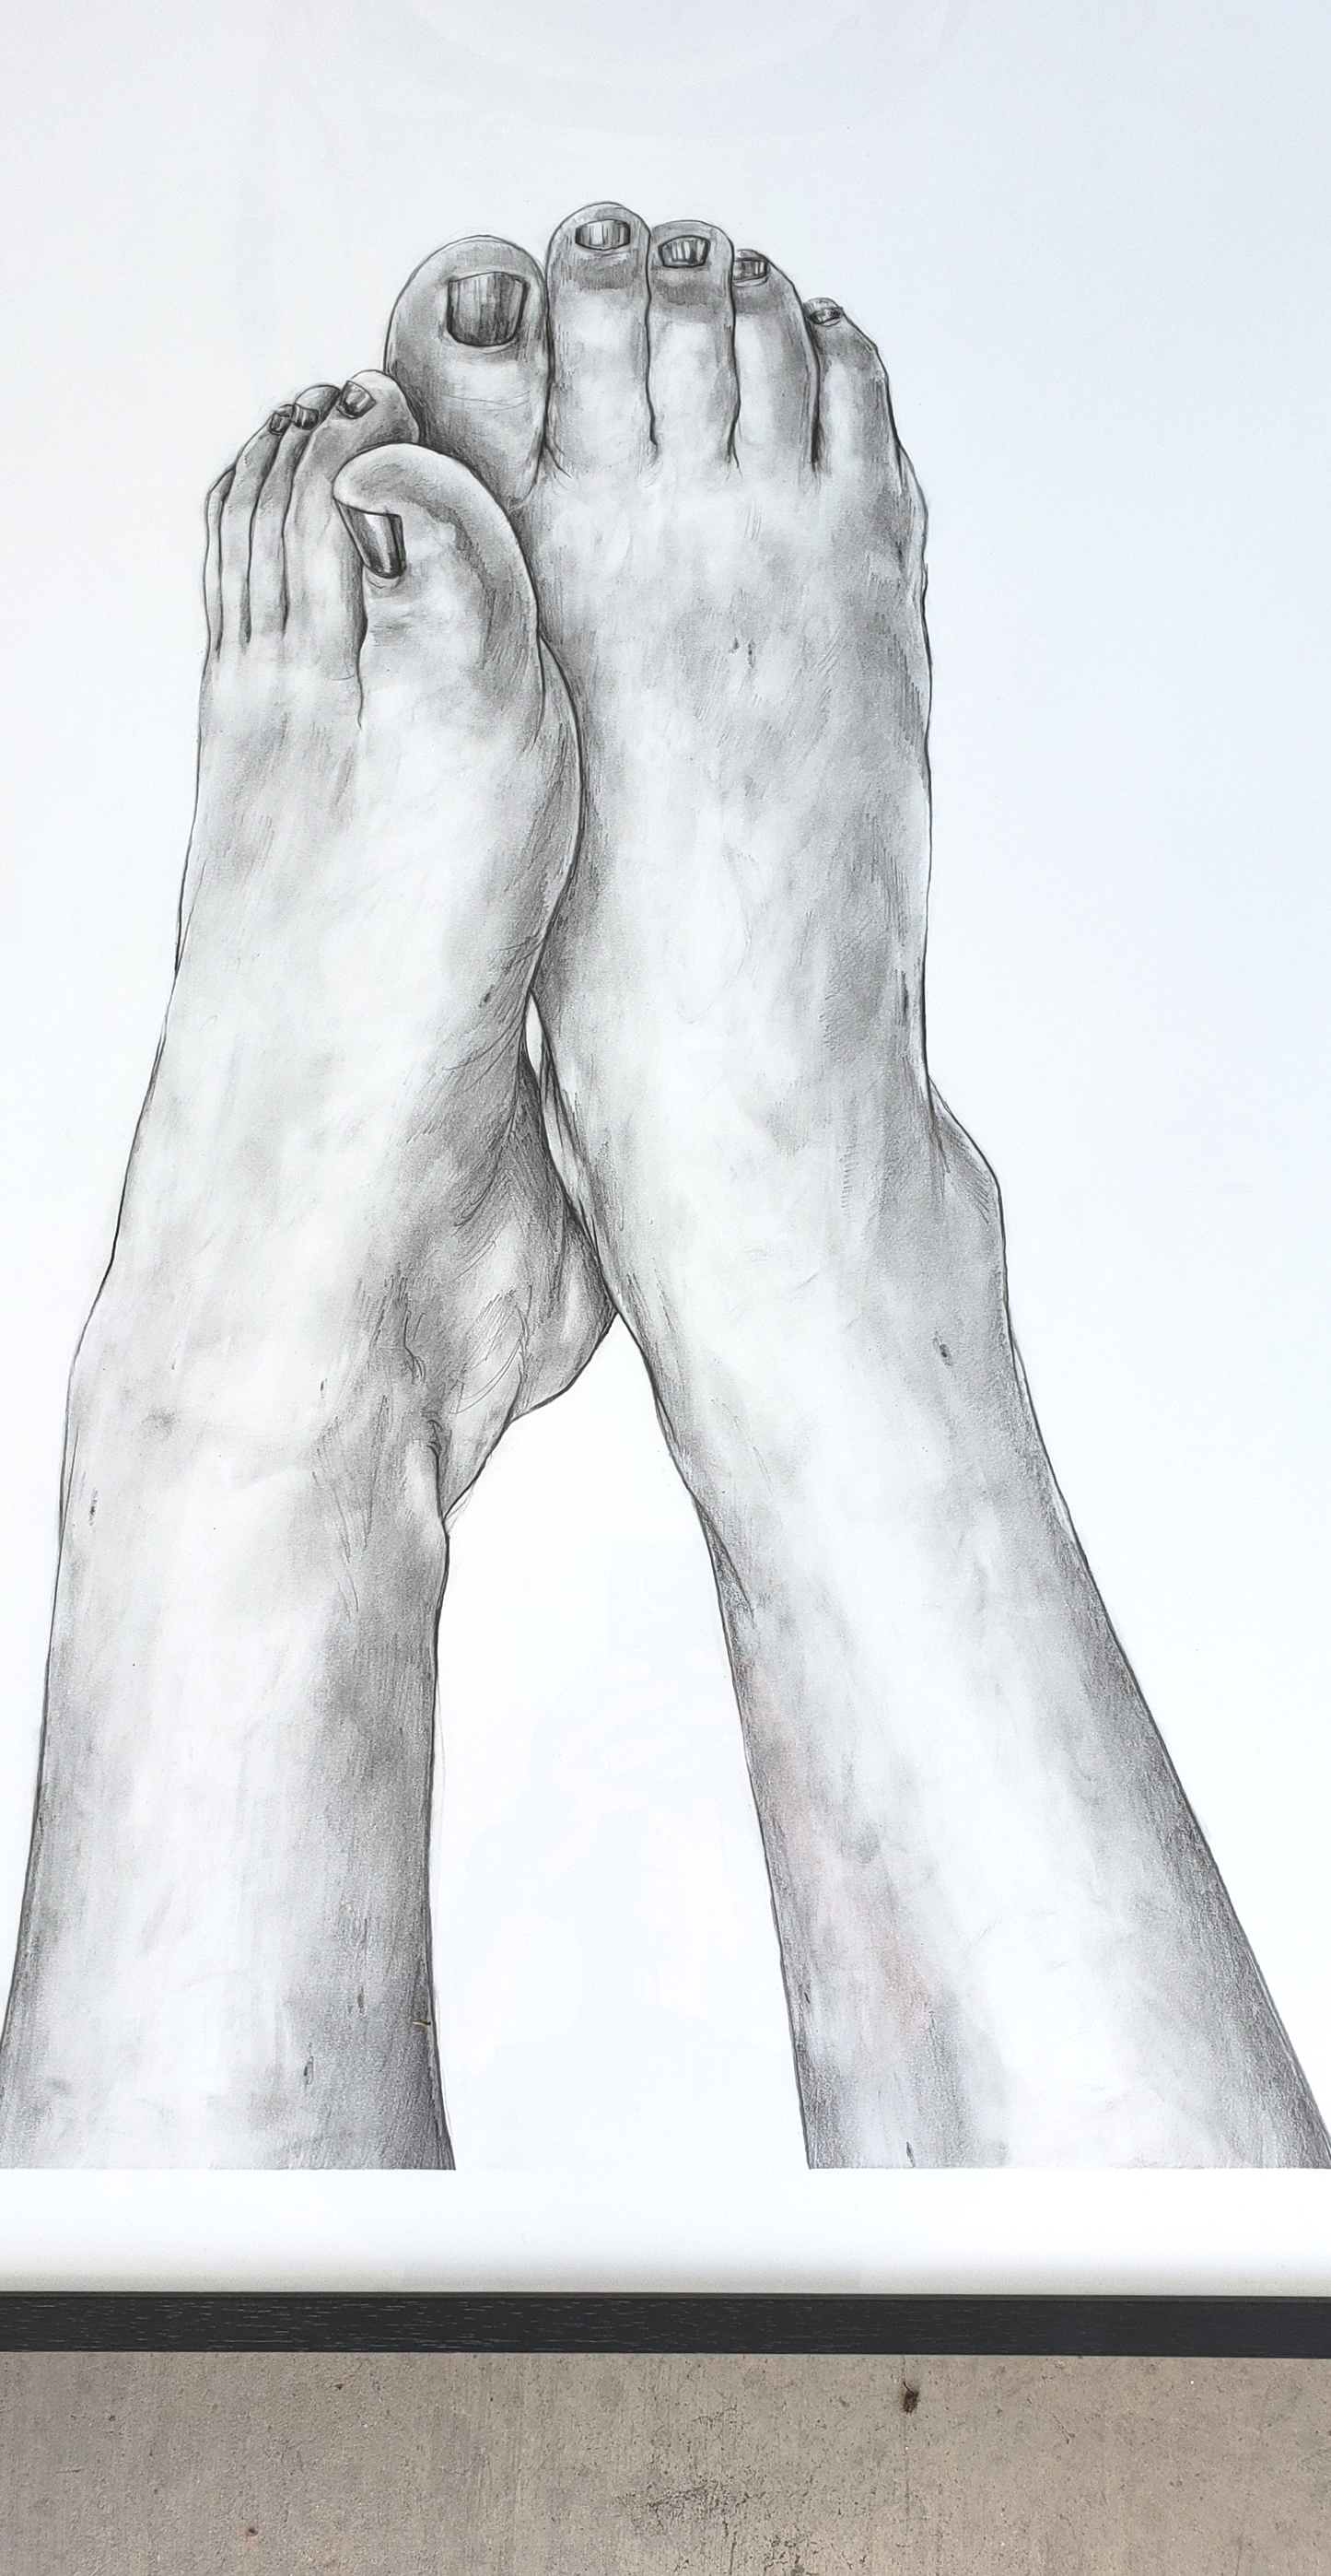 Christopher Gerling "Feet" Graphite on Paper